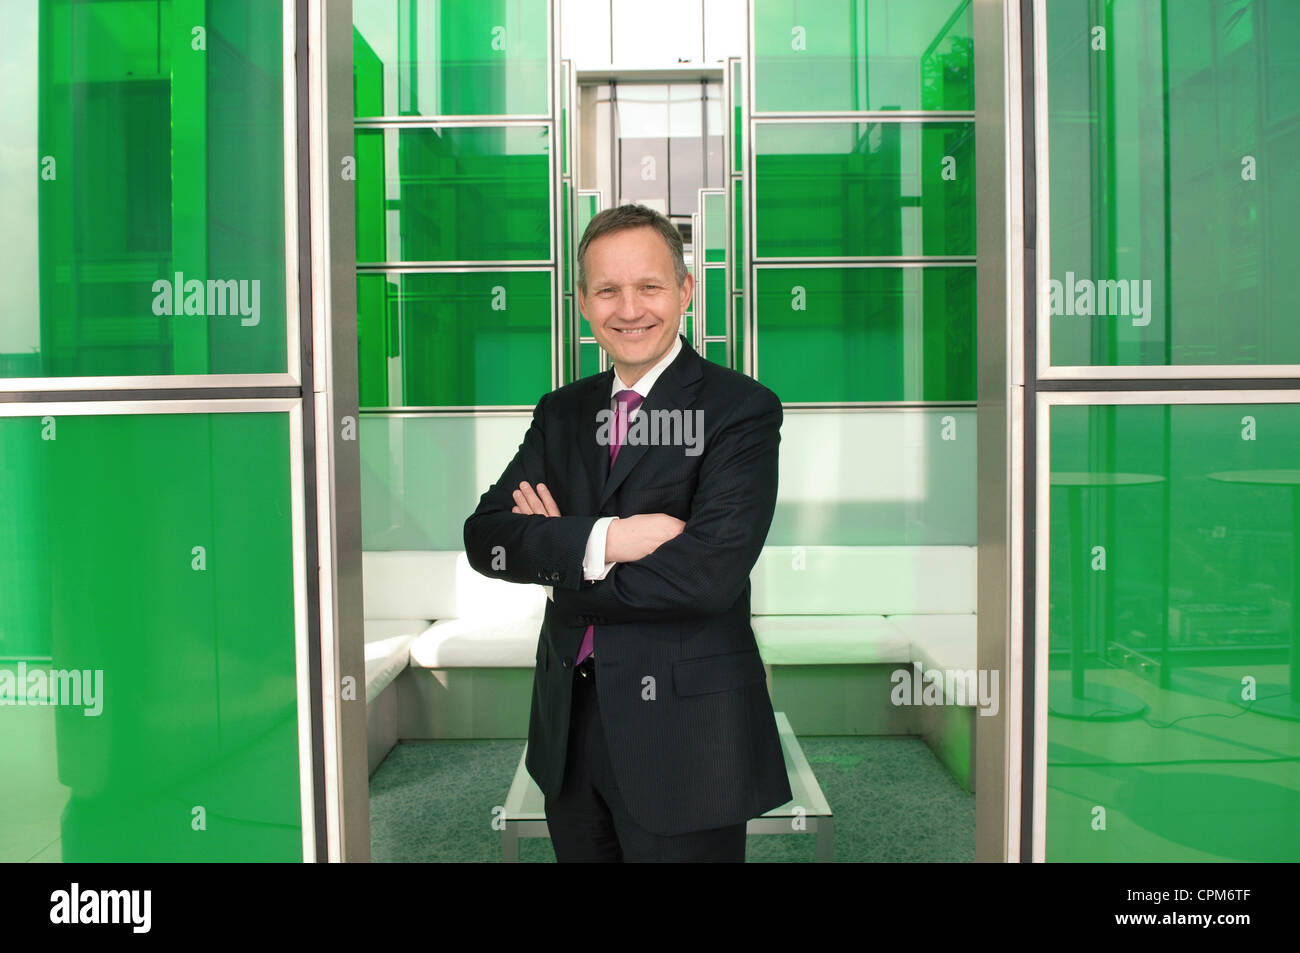 Barclays Chief Executive  Antony Jenkins Bank Barclays bank CEO green meeting room green glass folded arms Stock Photo